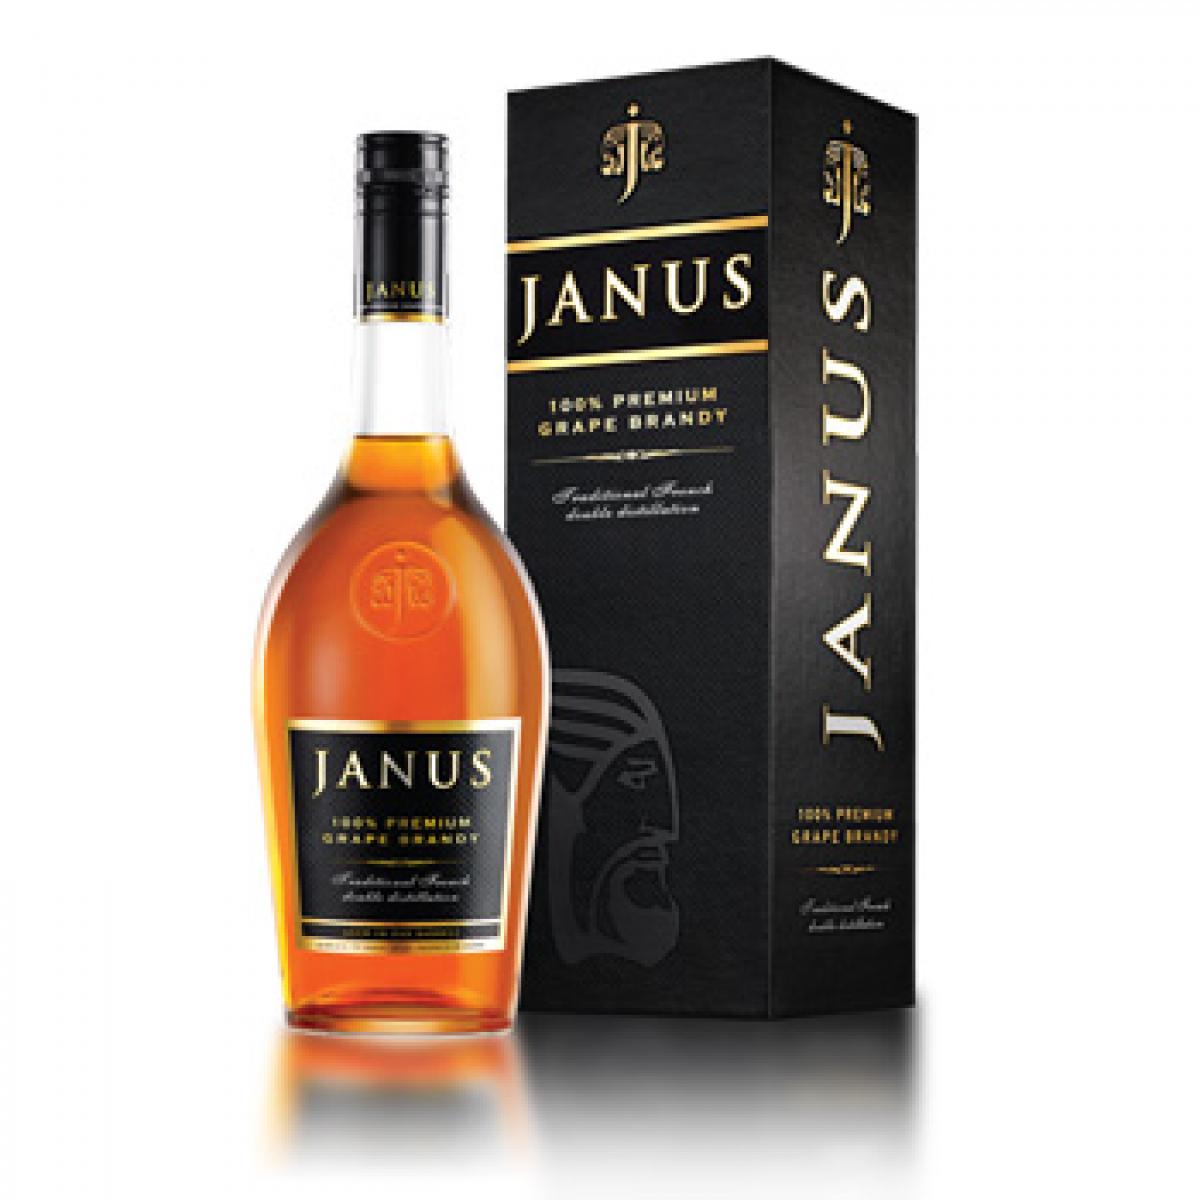 Janus Brandy